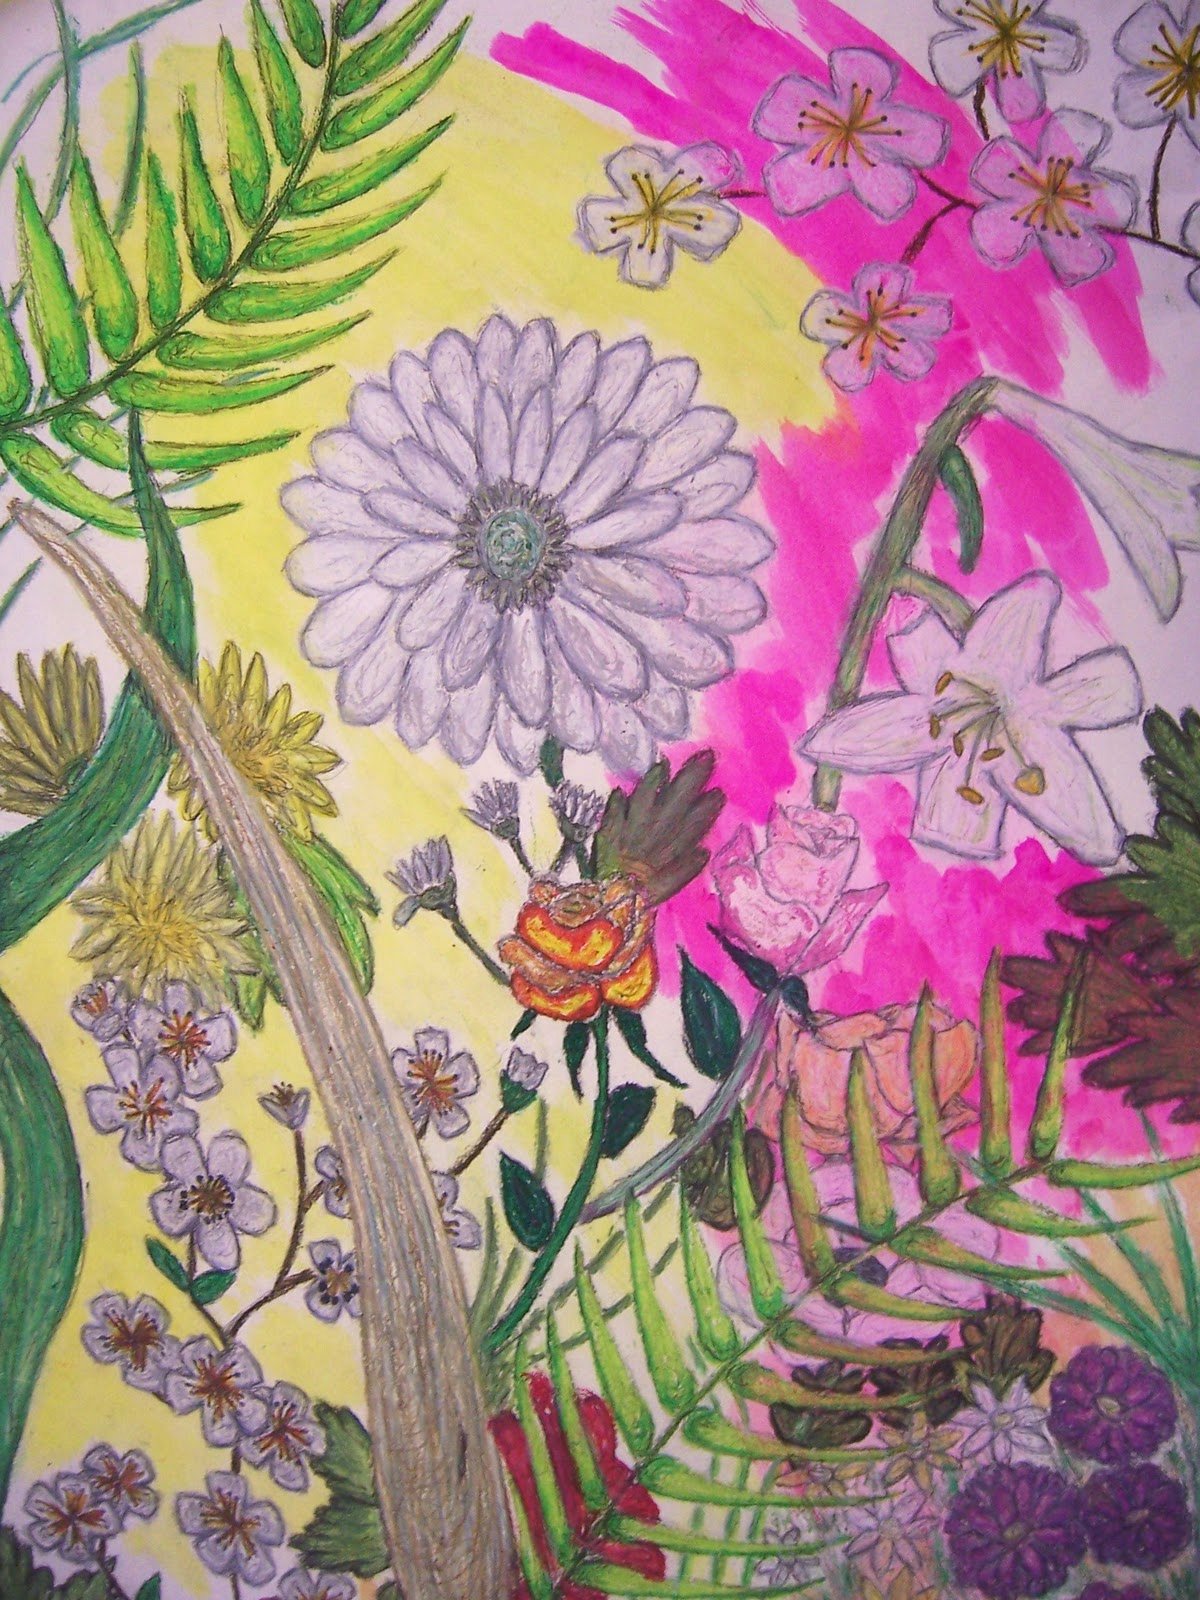 Drawings Of A Flower Luxury Digital Portfolio Observational Drawings From Flowers